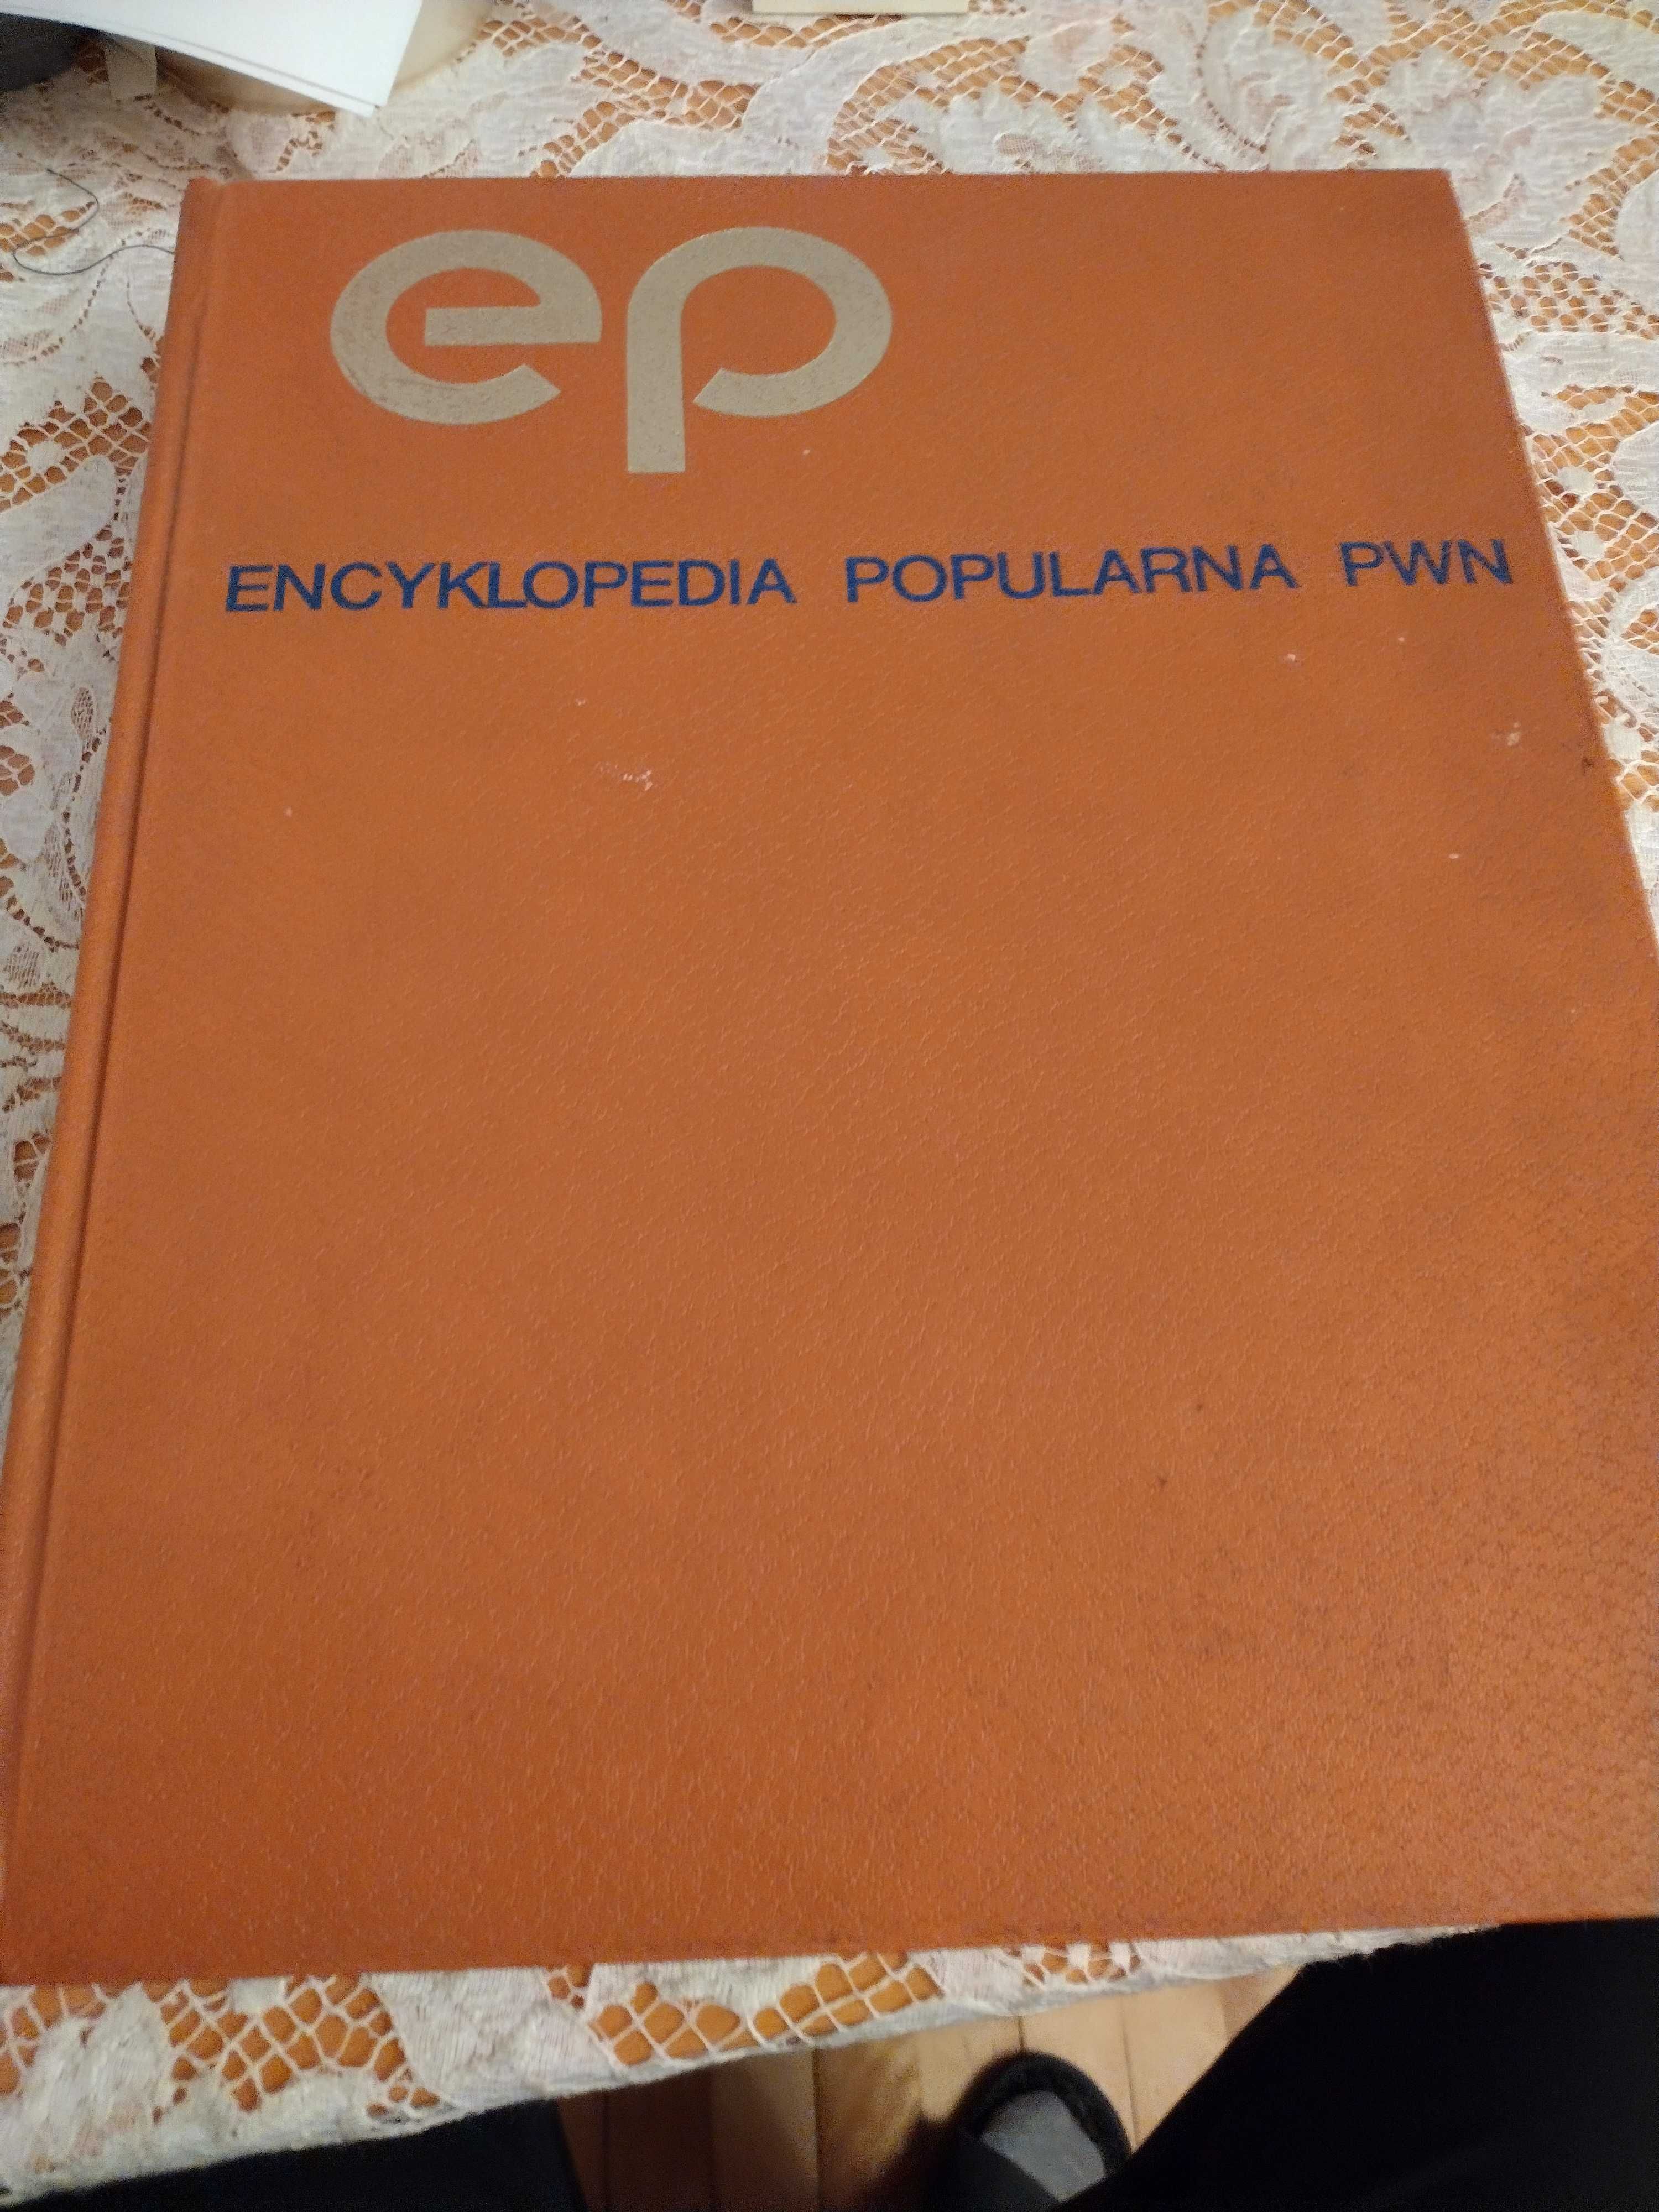 "Encyklopedia popularna PWN"